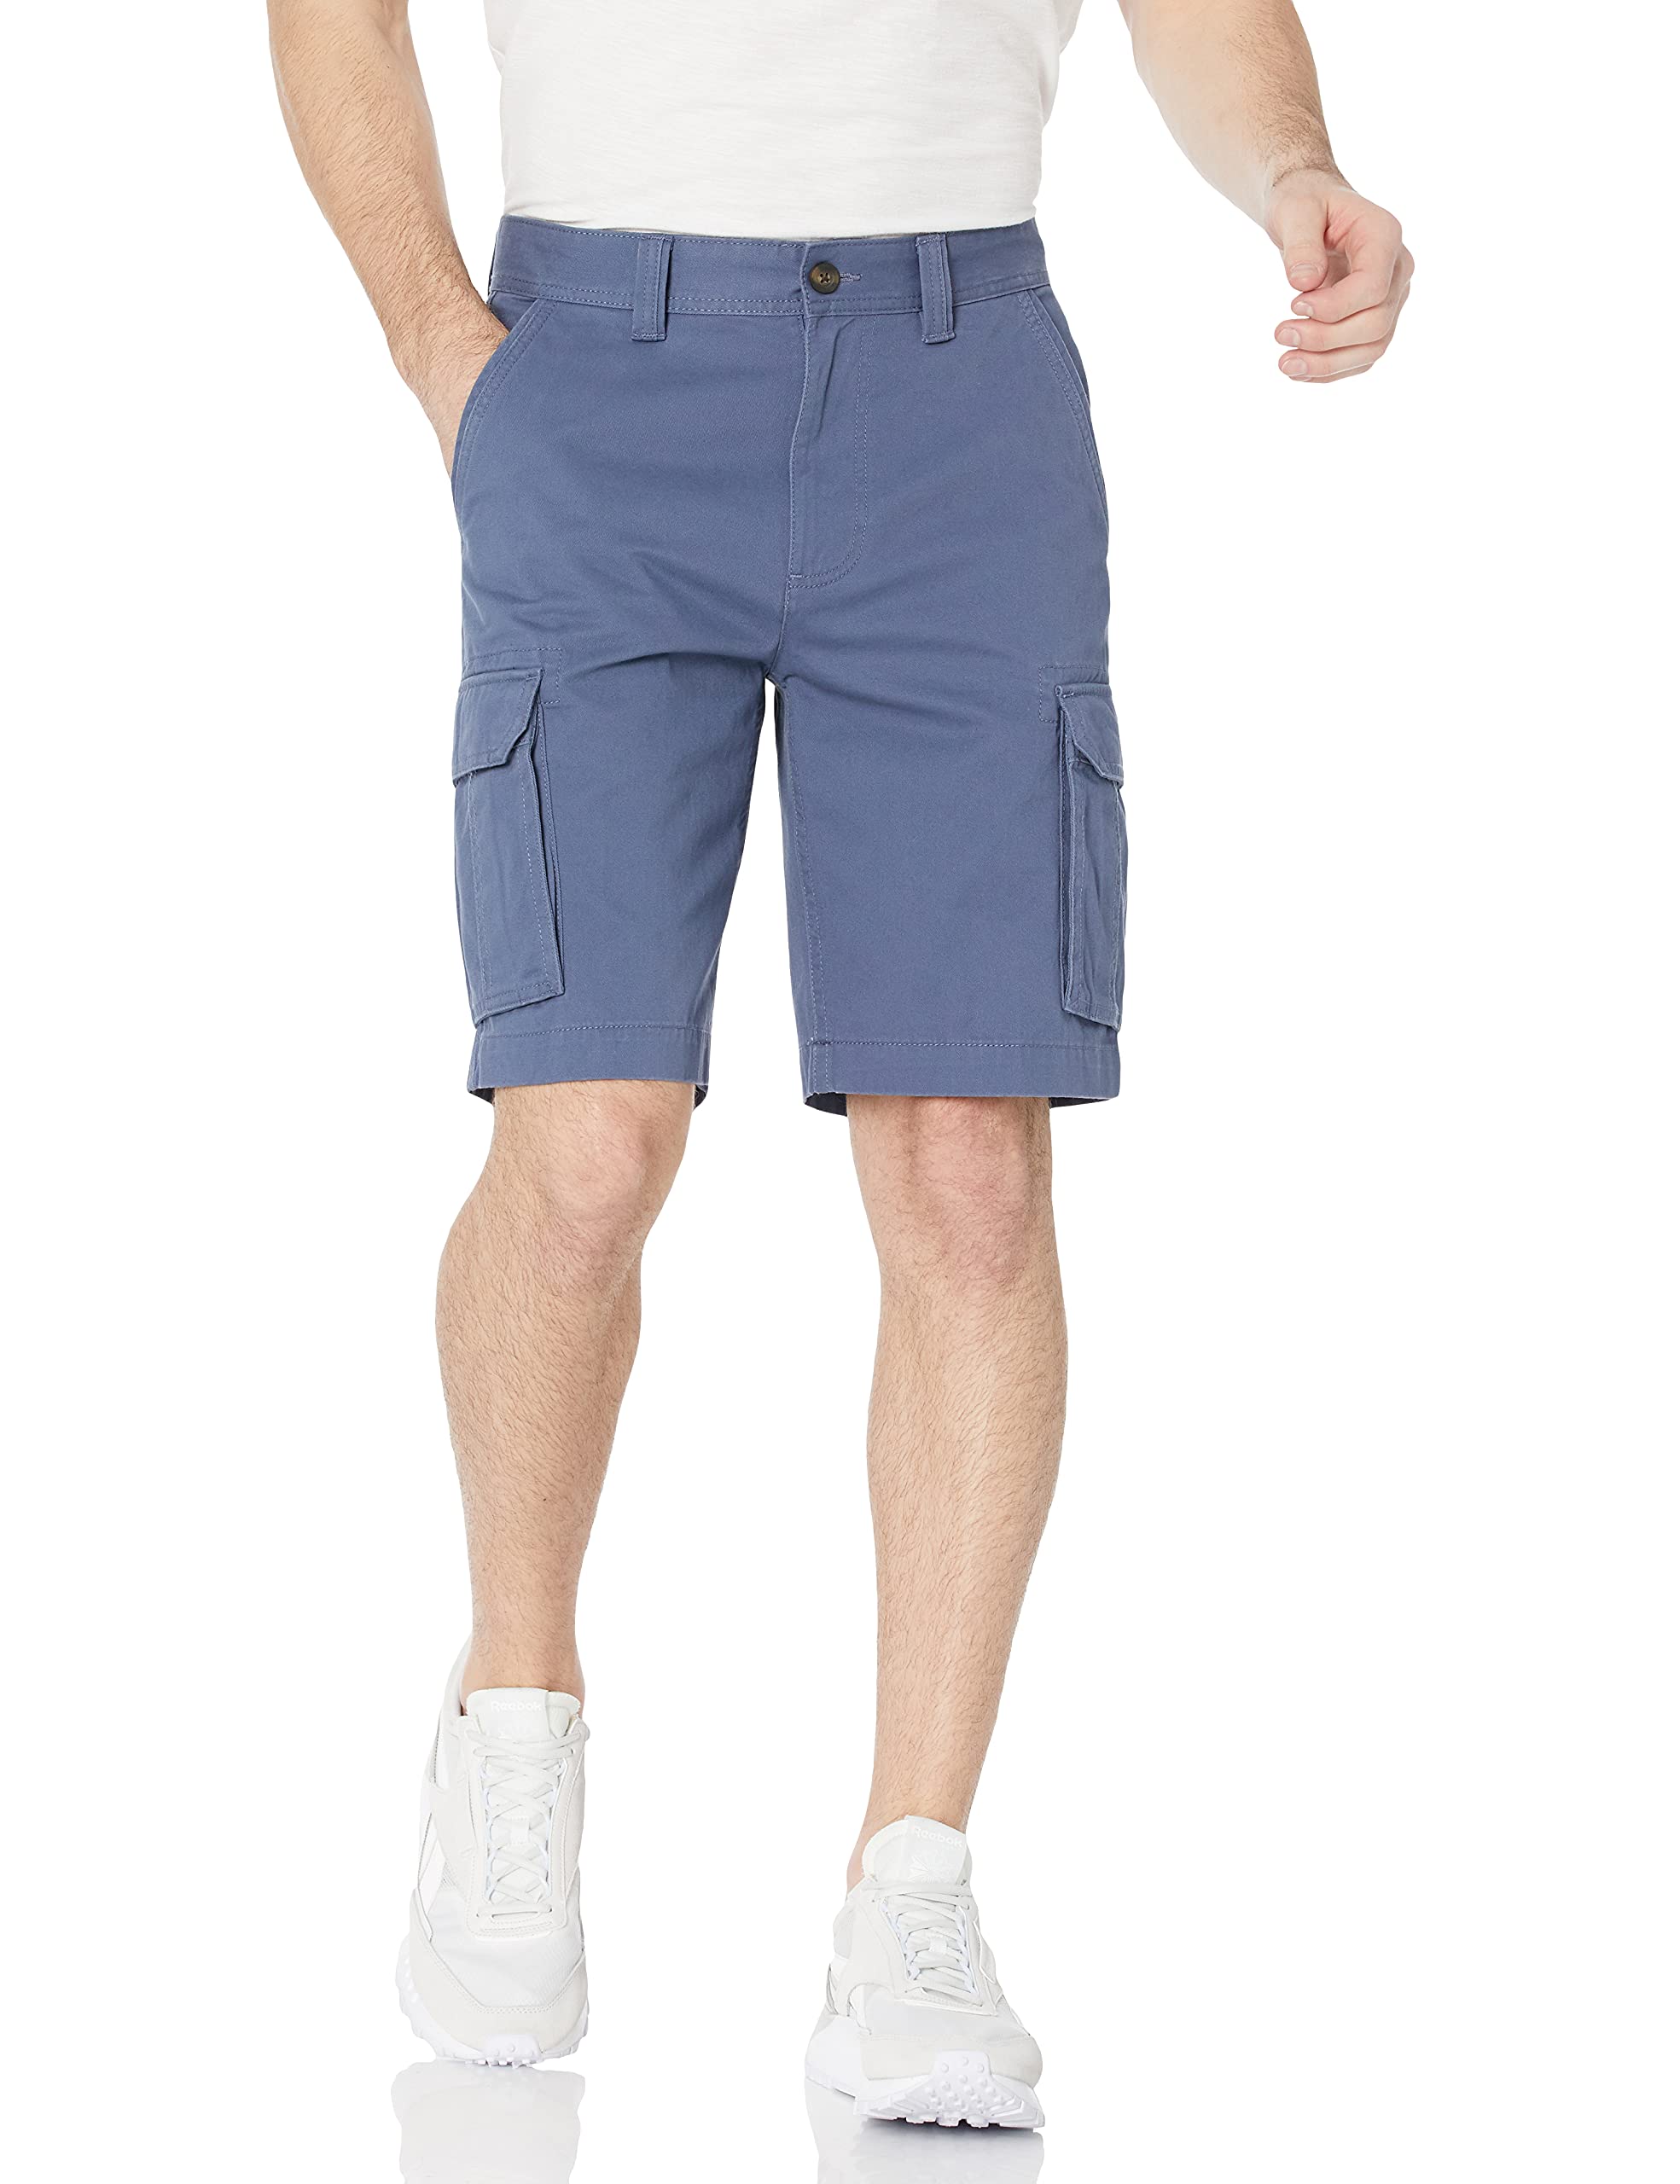 $7.40: Amazon Essentials Men's Classic-Fit Cargo Short (Various Colors, Limited Sizes)